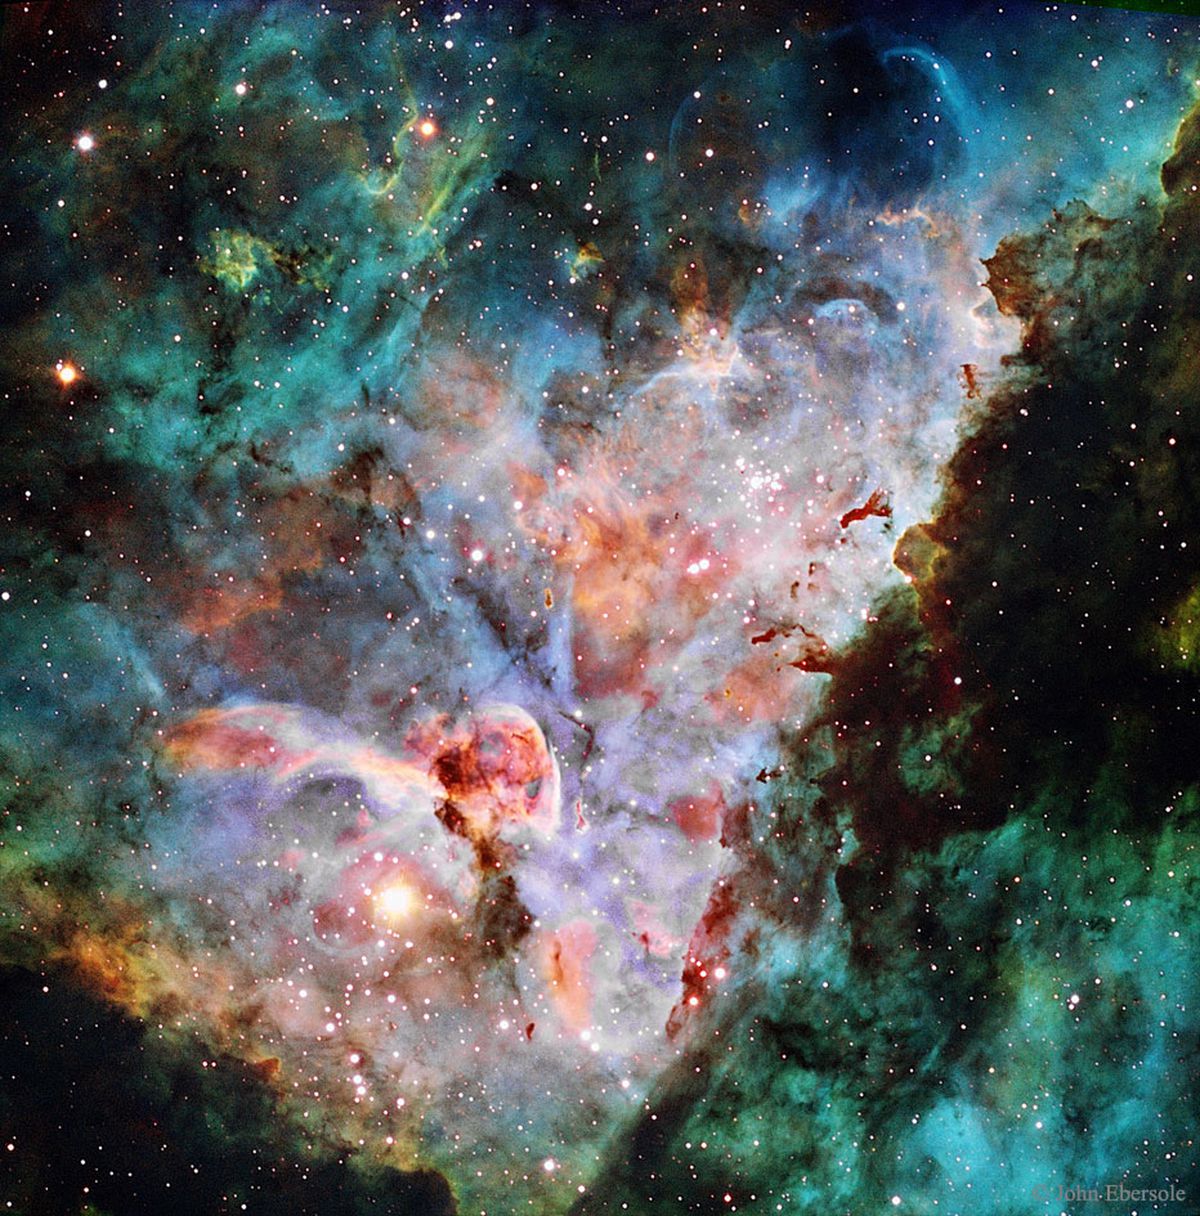  Clouds of the Carina Nebula 